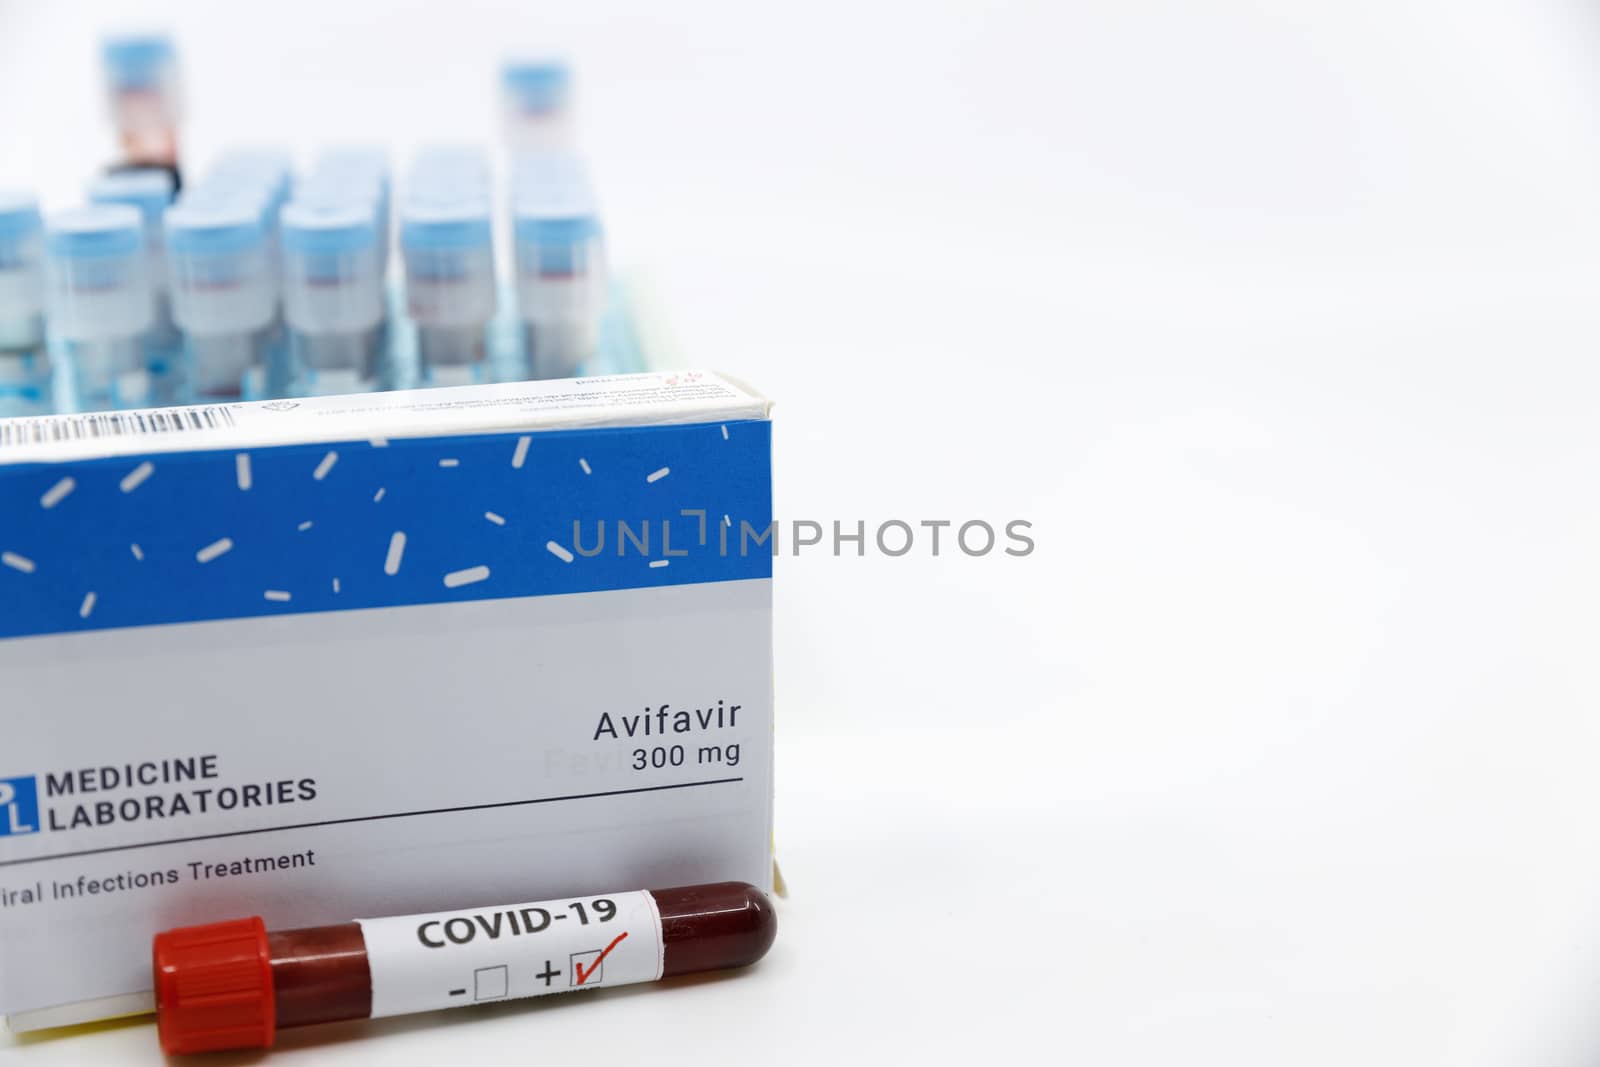 Dubai-UAE-Circa 2020:Coronavirus positive test in front of medicine.Concept of Avifavir medicine with blood tests tubes on the background.Cure for coronavirus,COVID-19 treatment.